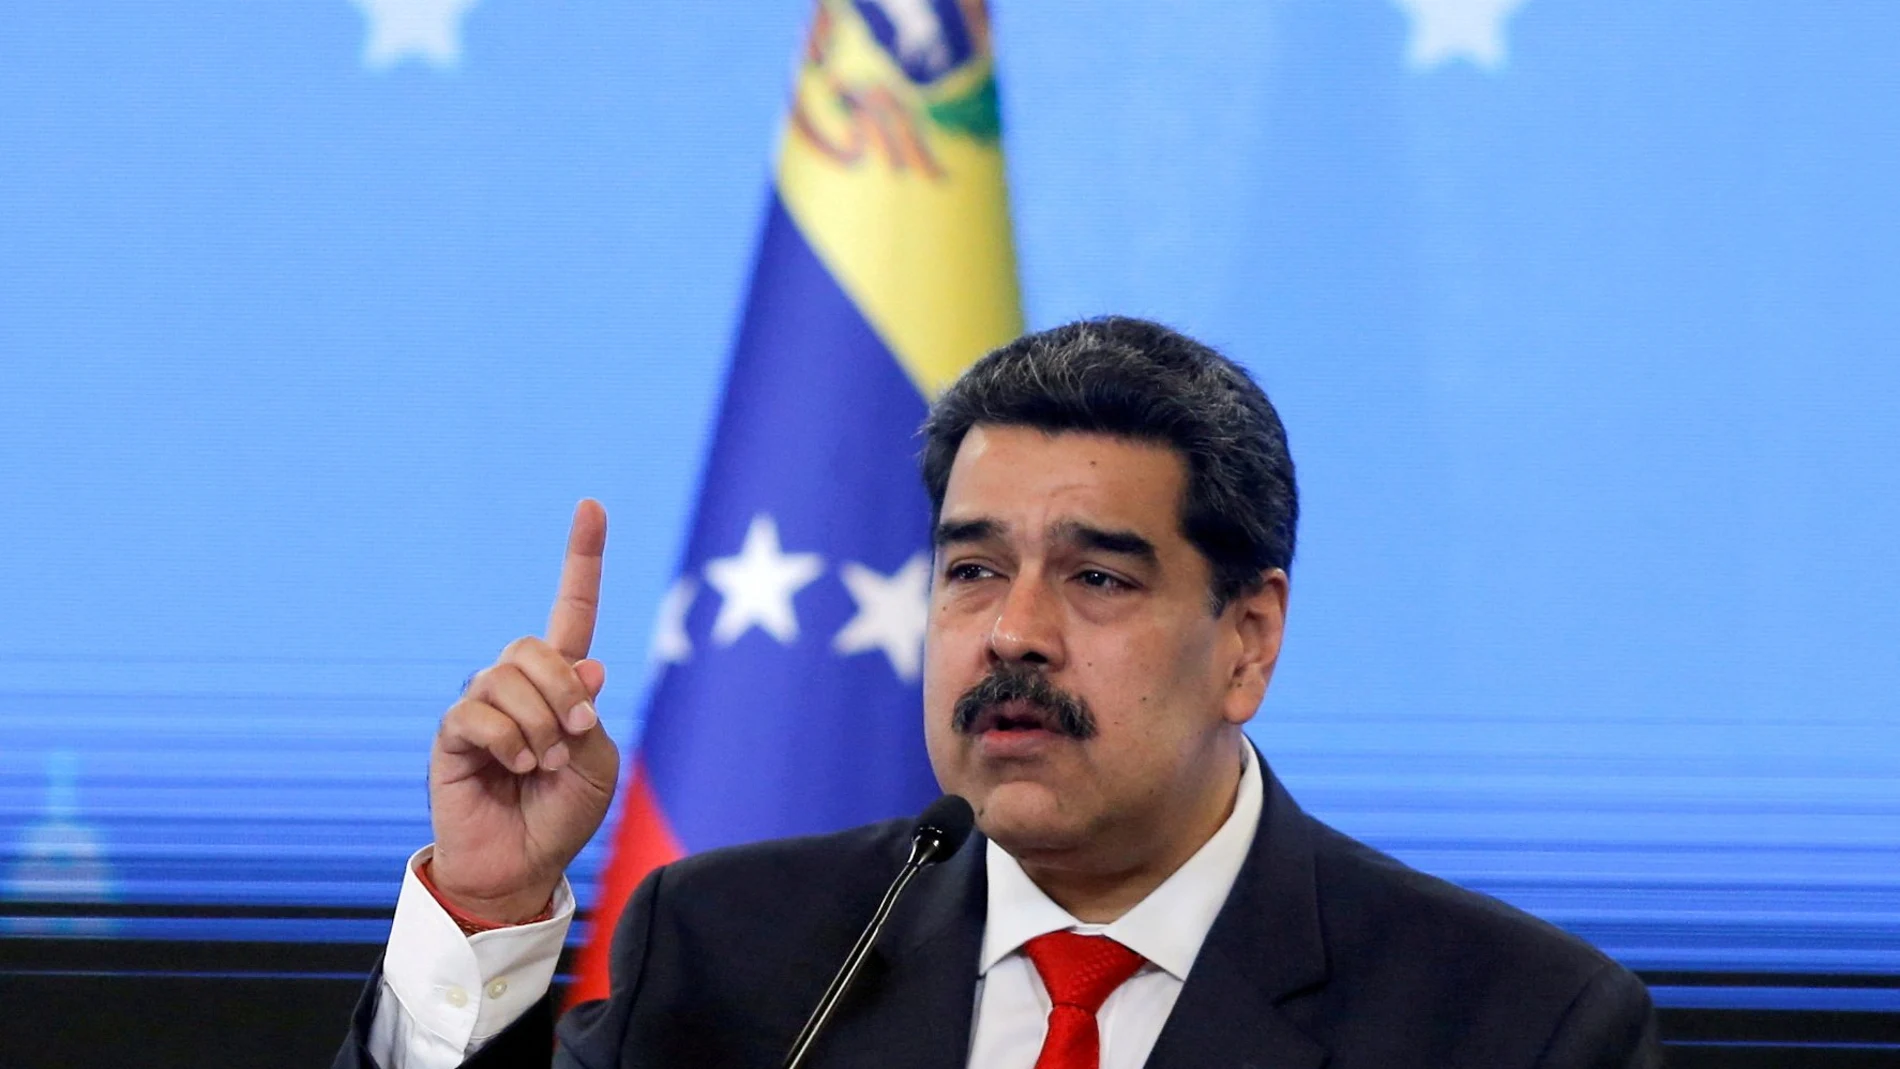 FILE PHOTO: Venezuelan President Nicolas Maduro gestures during a news conference on December 8, 2020. REUTERS/Manaure Quintero/File Photo